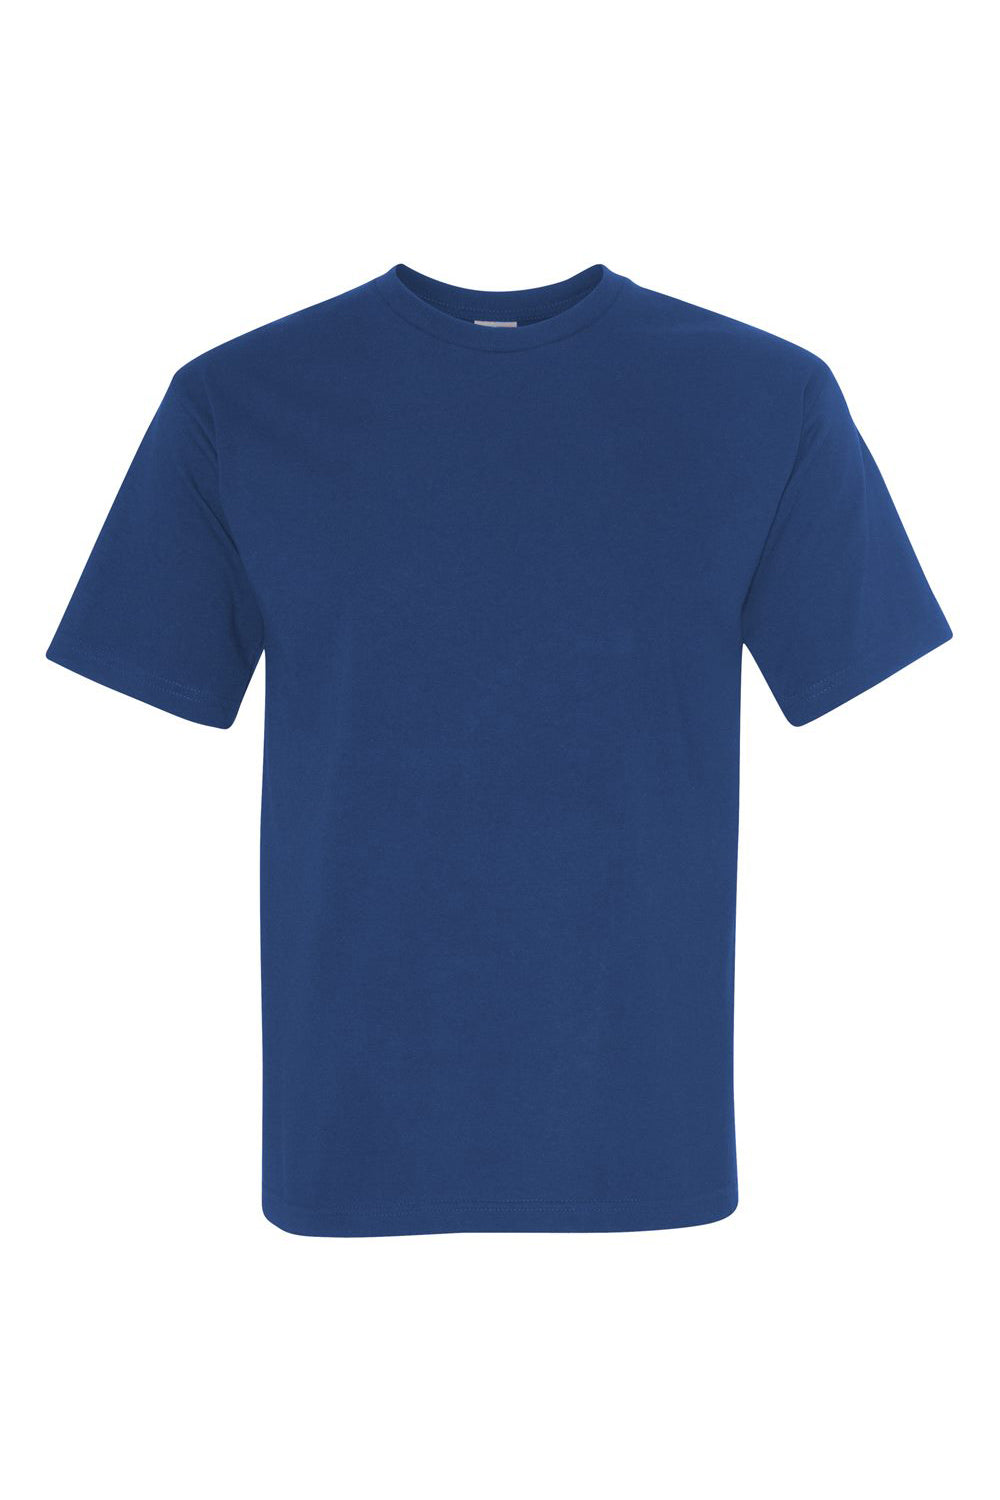 Bayside BA5040 Mens USA Made Short Sleeve Crewneck T-Shirt Light Navy Blue Flat Front